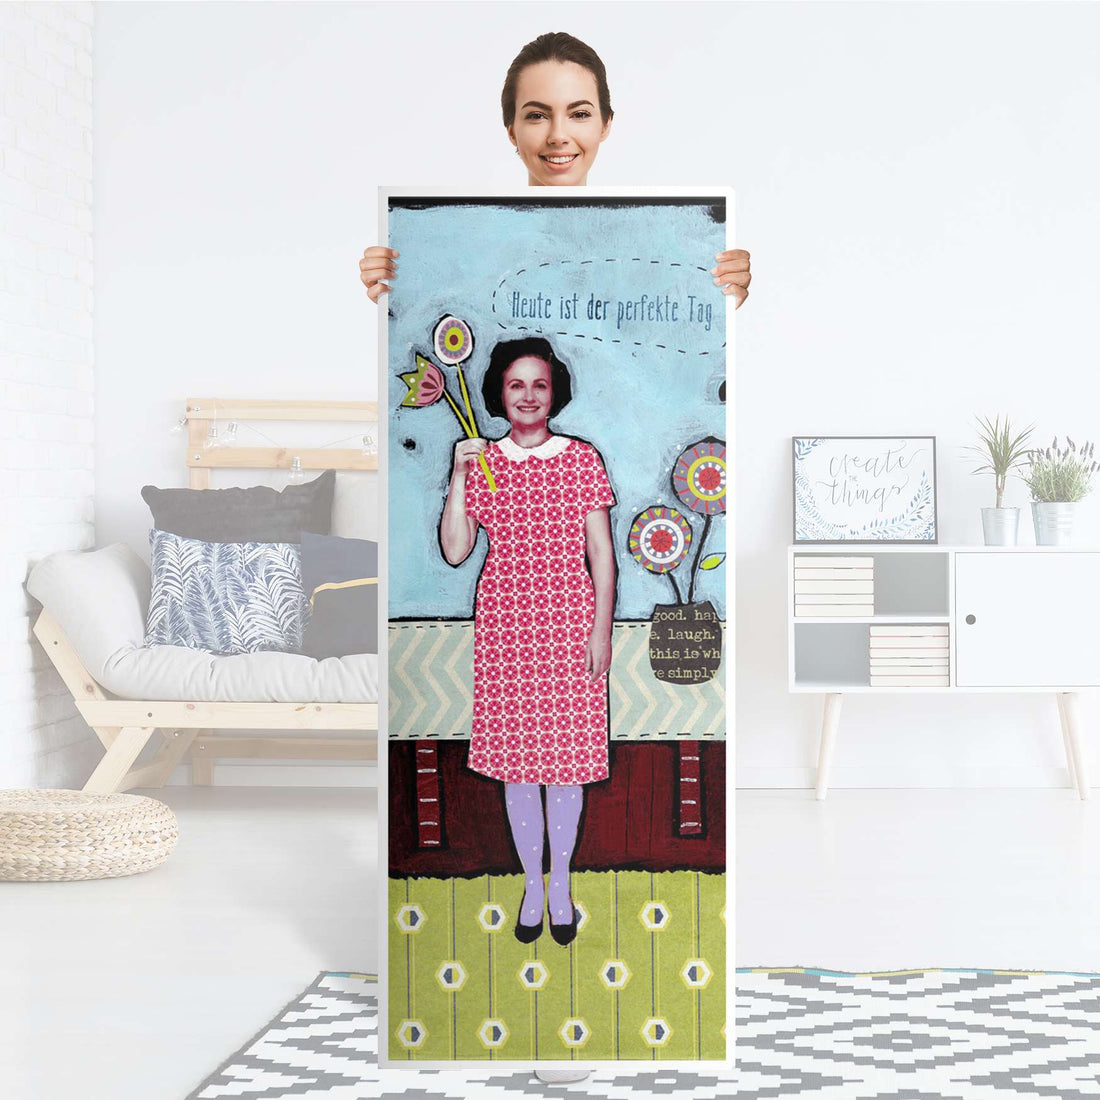 Kühlschrank Folie Der perfekte Tag - Küche - Kühlschrankgröße 60x150 cm